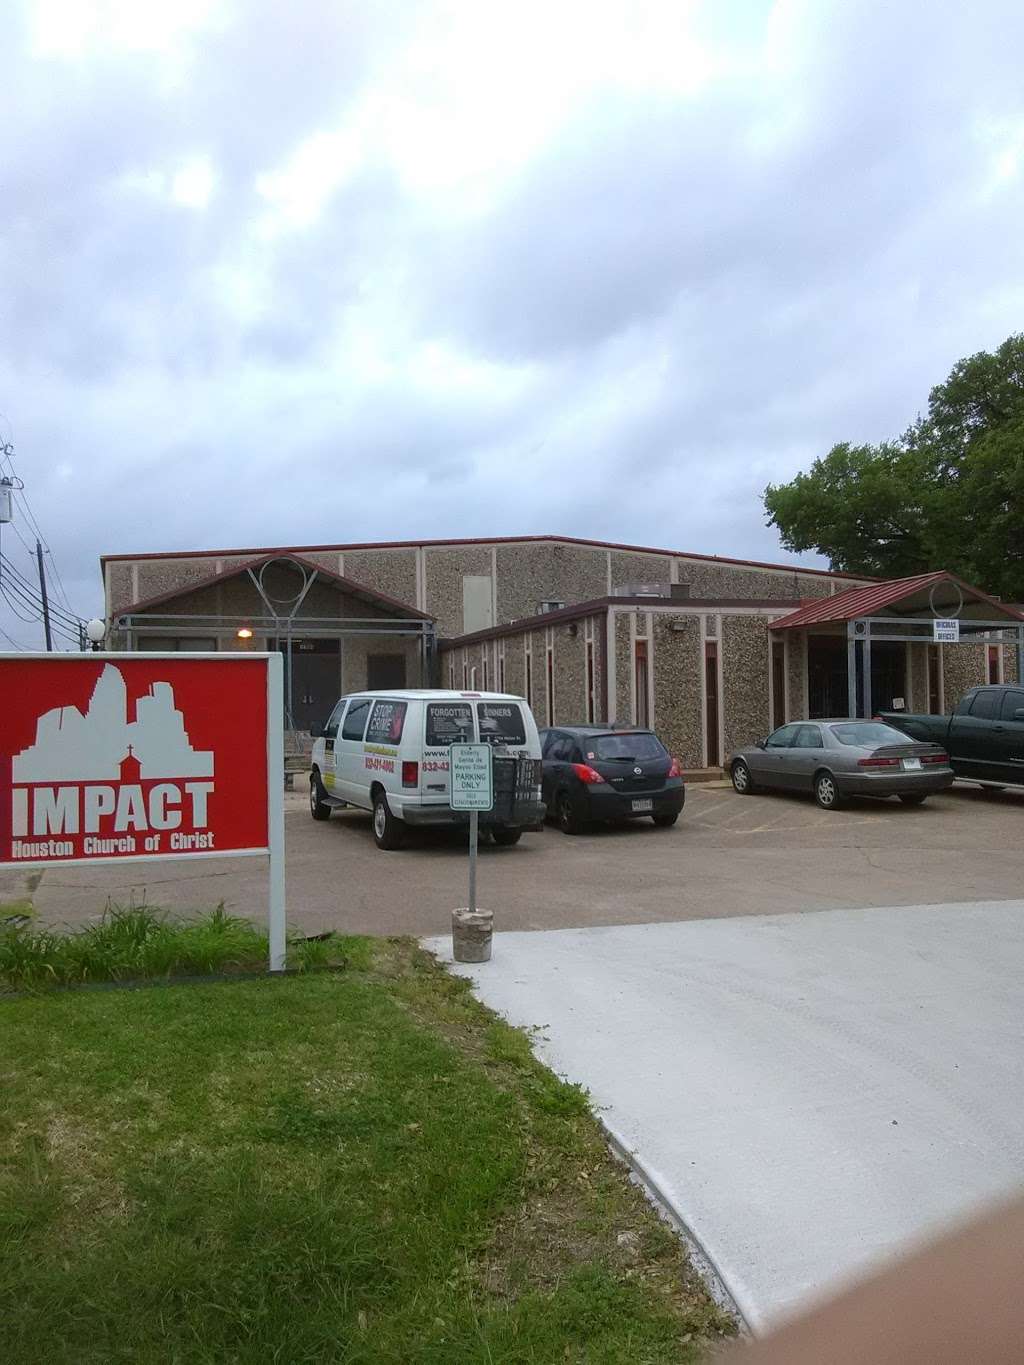 Impact Houston Church of Christ | 1704 Weber St, Houston, TX 77007, USA | Phone: (713) 864-5667